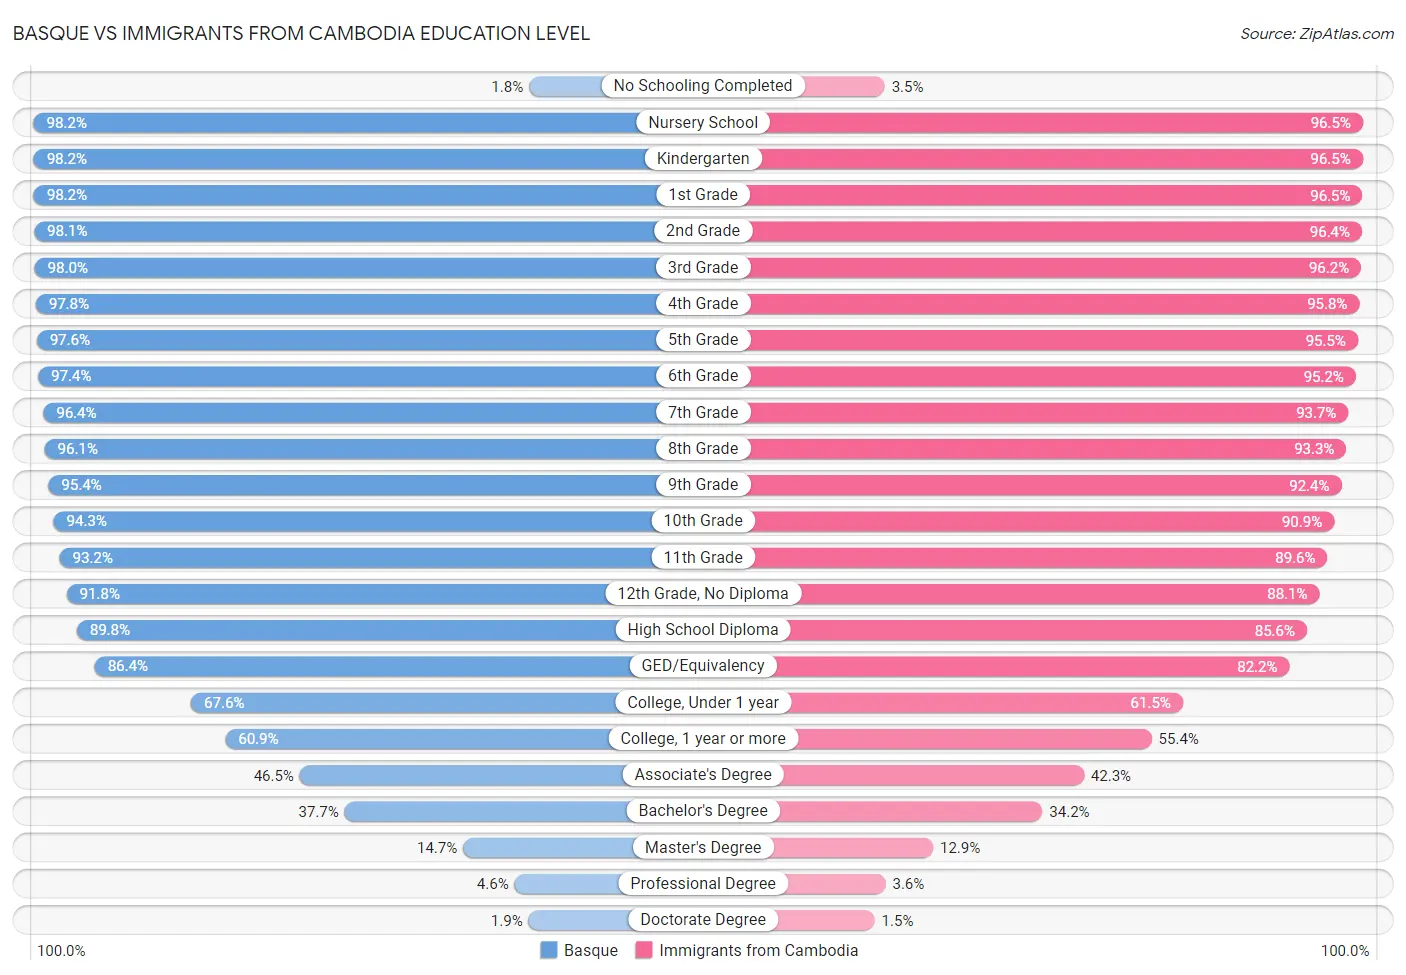 Basque vs Immigrants from Cambodia Education Level